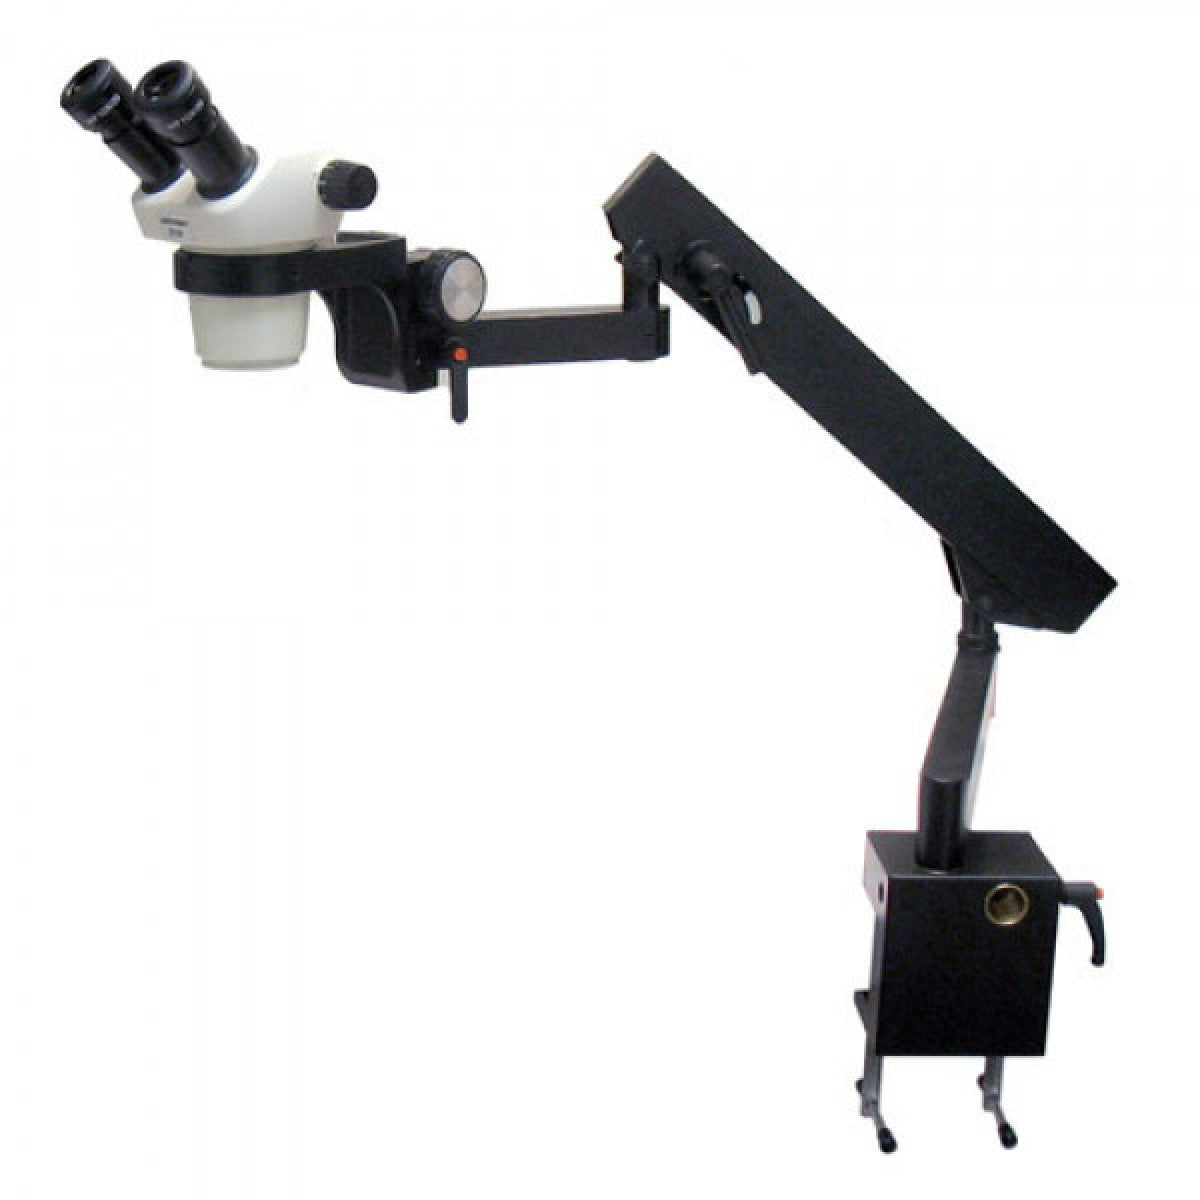 Unitron Z730 Zoom Stereo Microscope on Flex Arm Stand - microscopemarketplace